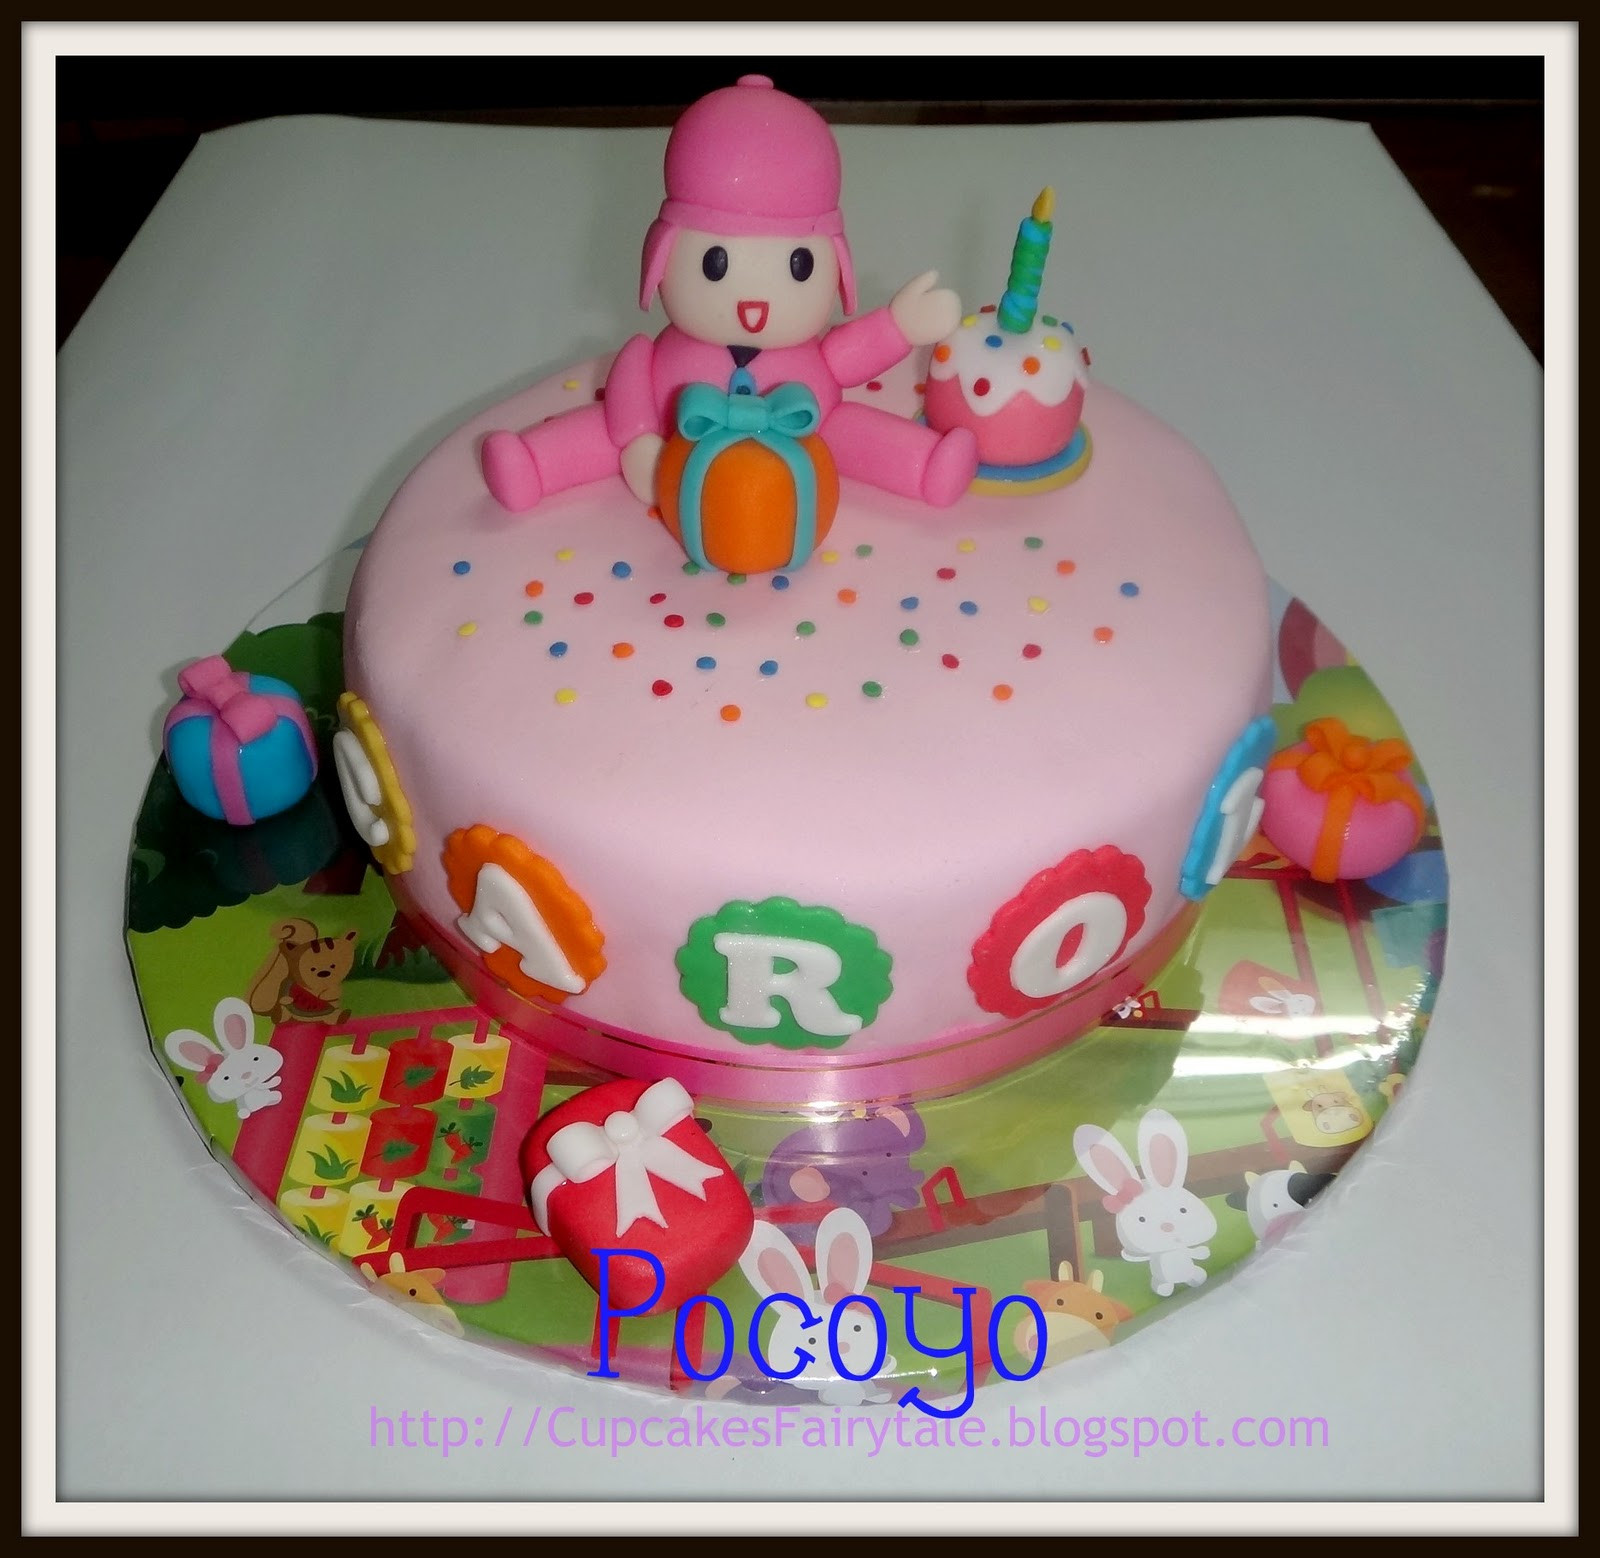 Best ideas about Happy Birthday Carol Cake
. Save or Pin Cupcakes Fairytale BABY CAROL S 1ST BIRTHDAY CAKE POCOYO Now.